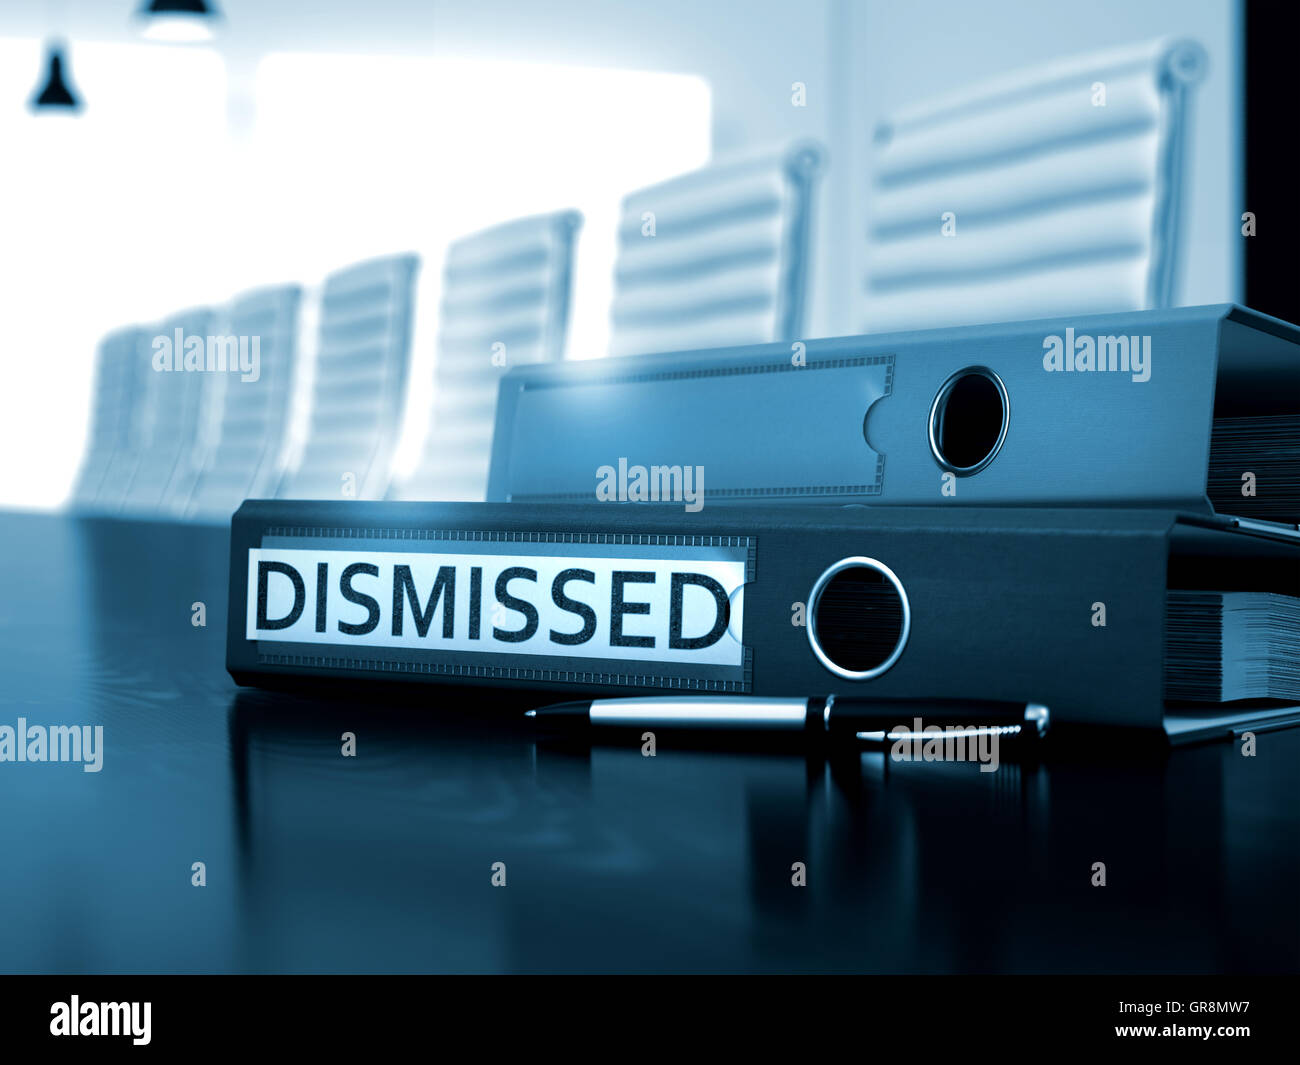 Dismissed on Office Binder. Toned Image. 3D Illustration. Stock Photo